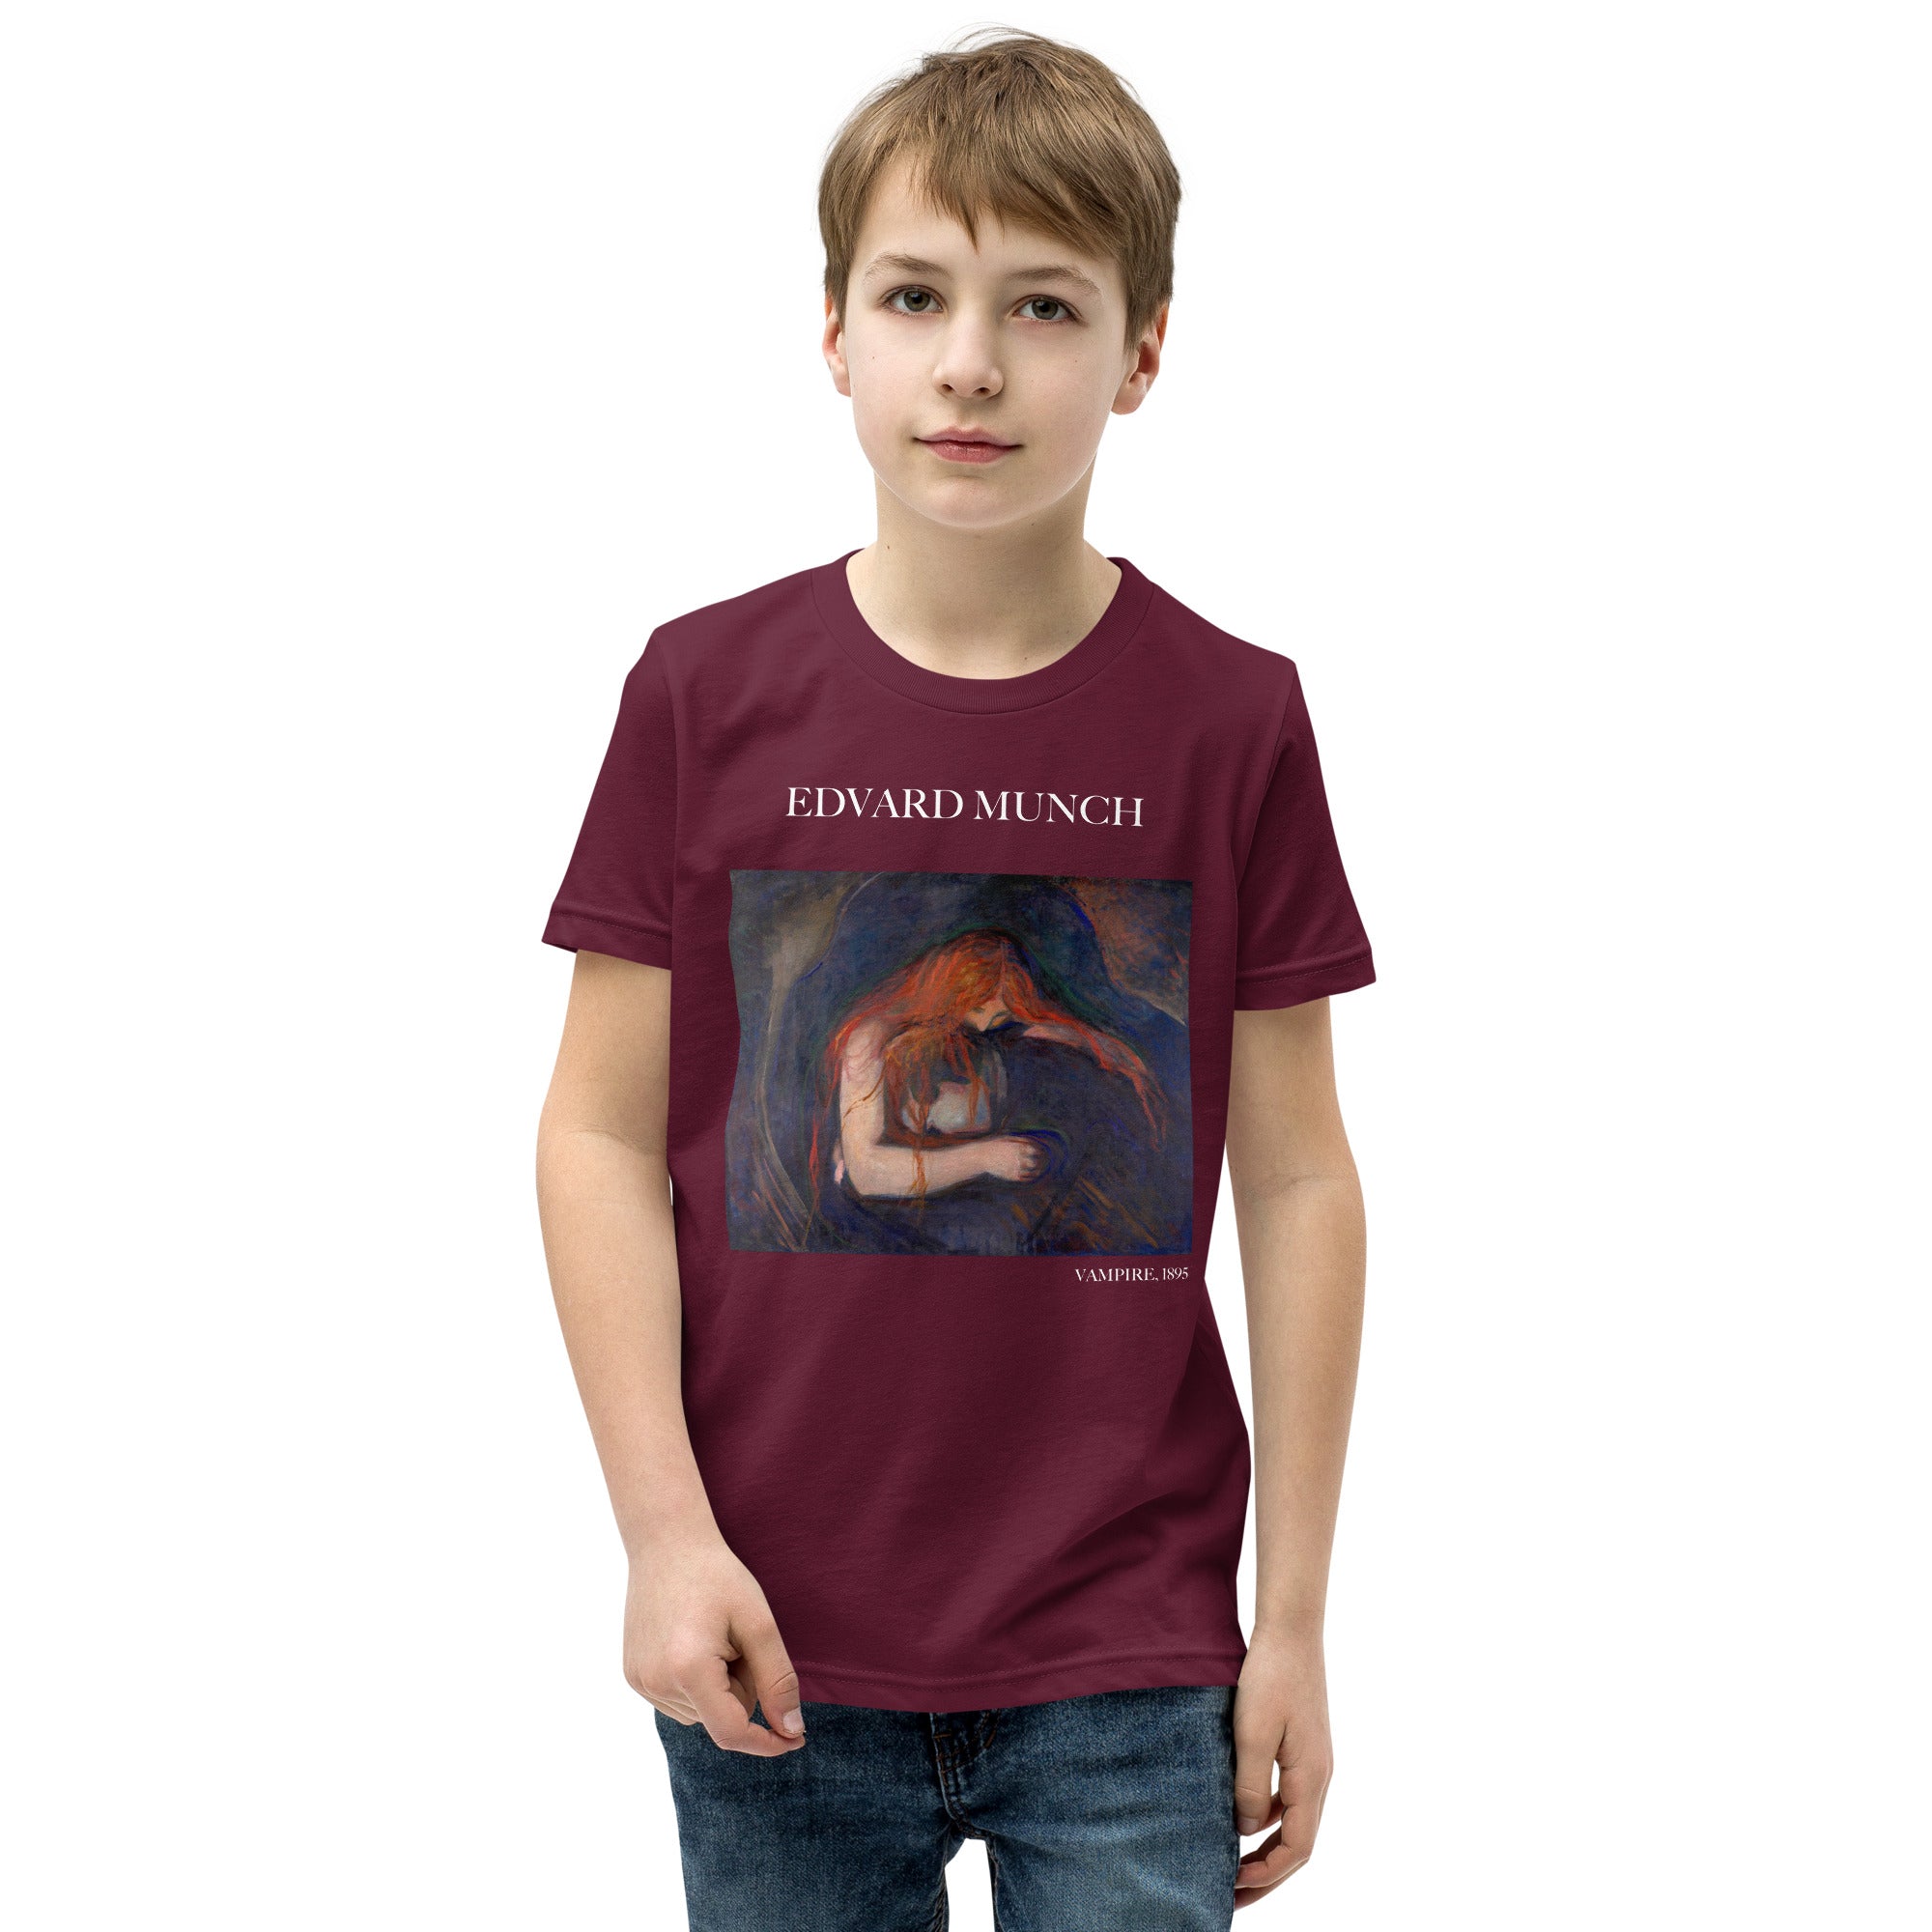 Edvard Munch 'Vampire' Famous Painting Short Sleeve T-Shirt | Premium Youth Art Tee